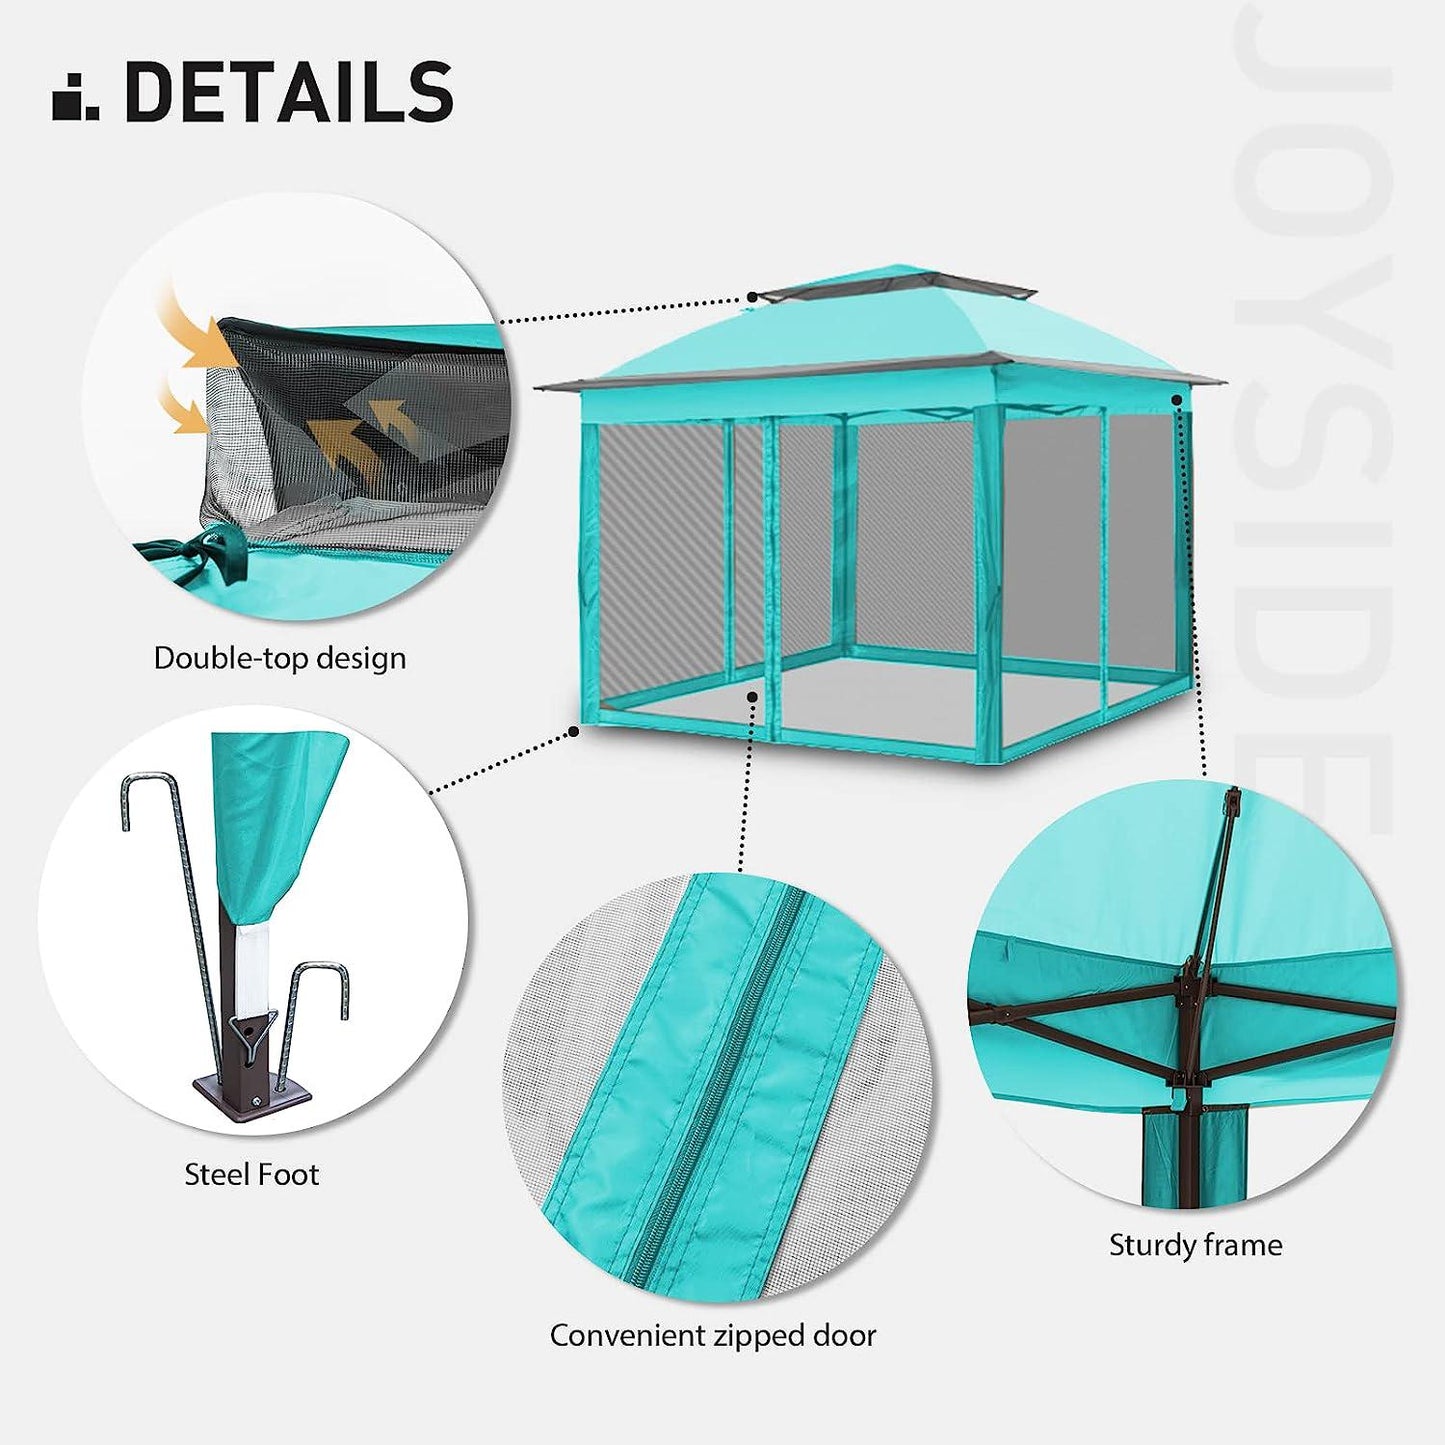 11'x11' Pop Up Gazebo for Patios Gazebo Canopy Tent with Sidewalls Outdoor Gazebo with Mosquito Netting Pop Up Canopy Shelter Wedding Tent with Aqua Shade